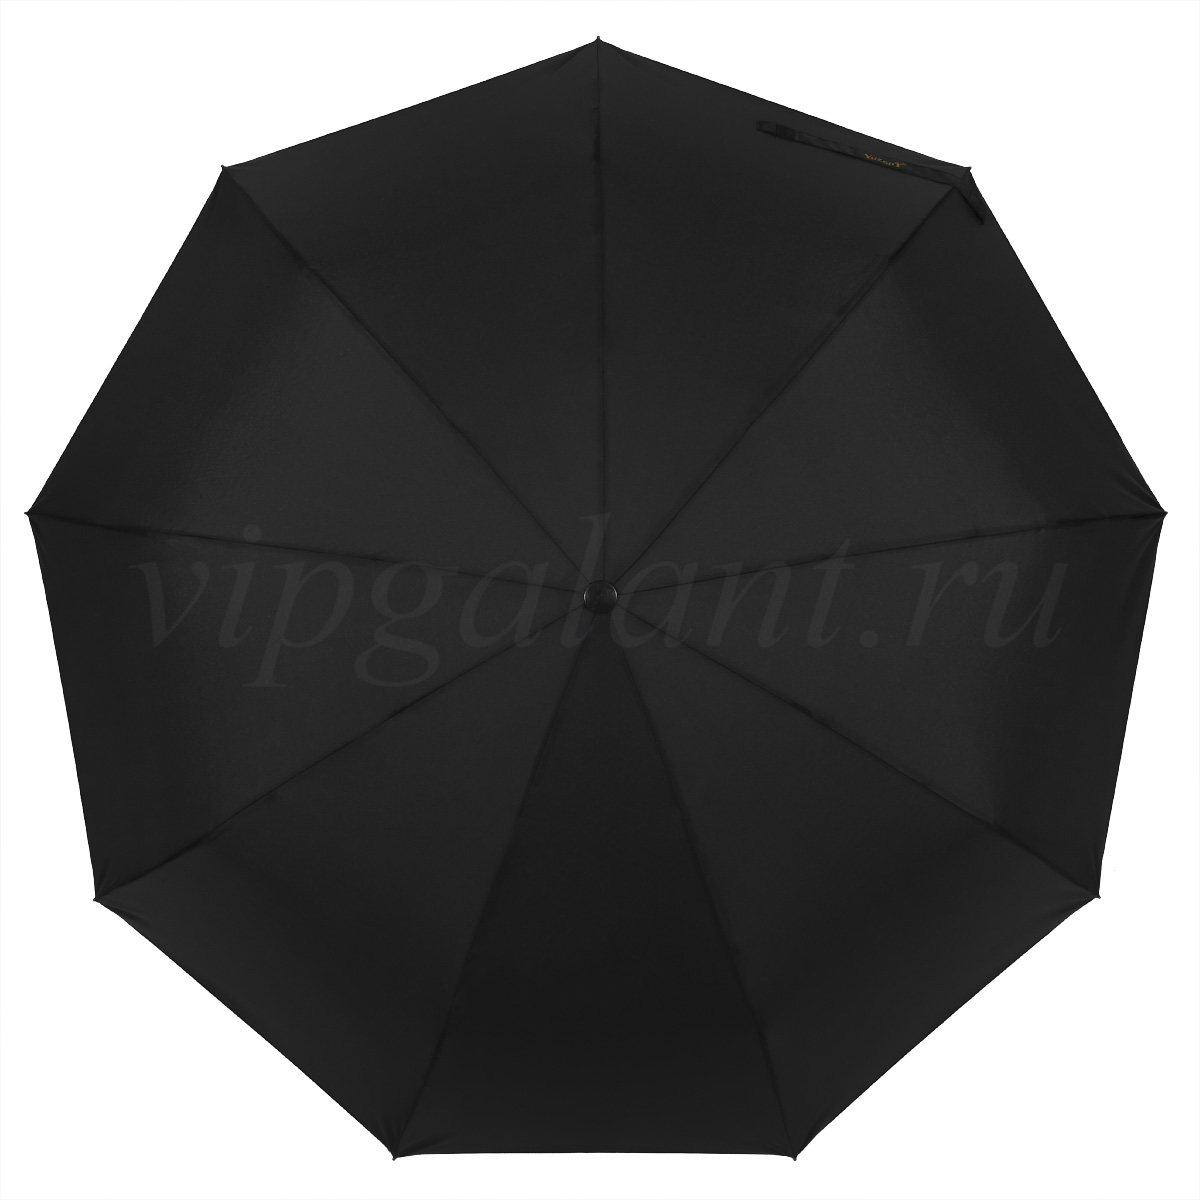 Мужской зонт с системой Антиветер Yuzont 501 фото 1